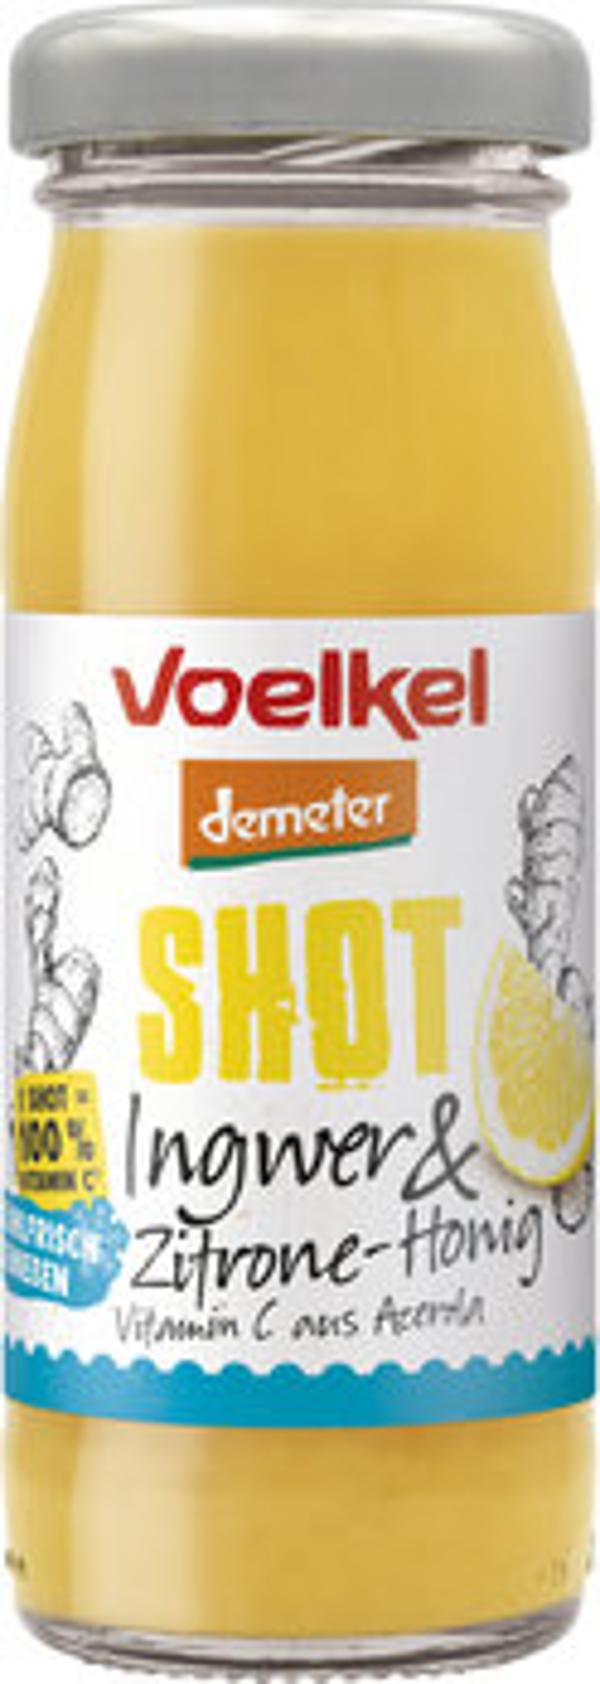 Produktfoto zu Shot Ingwer Zitrone-Honig, 95 ml